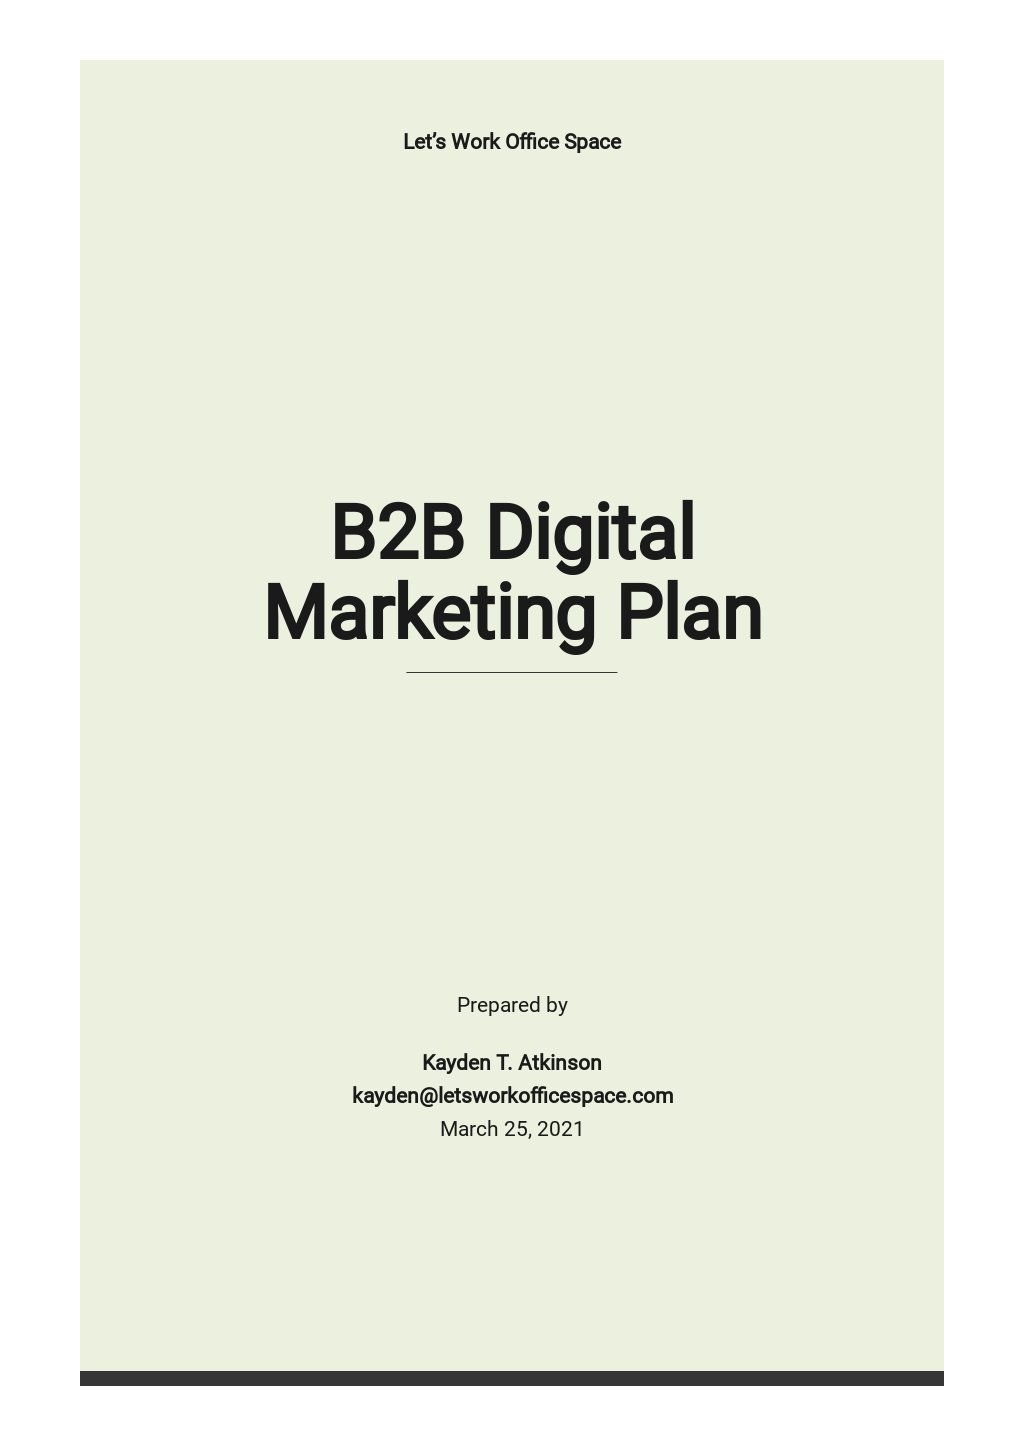 digital marketing business plan template